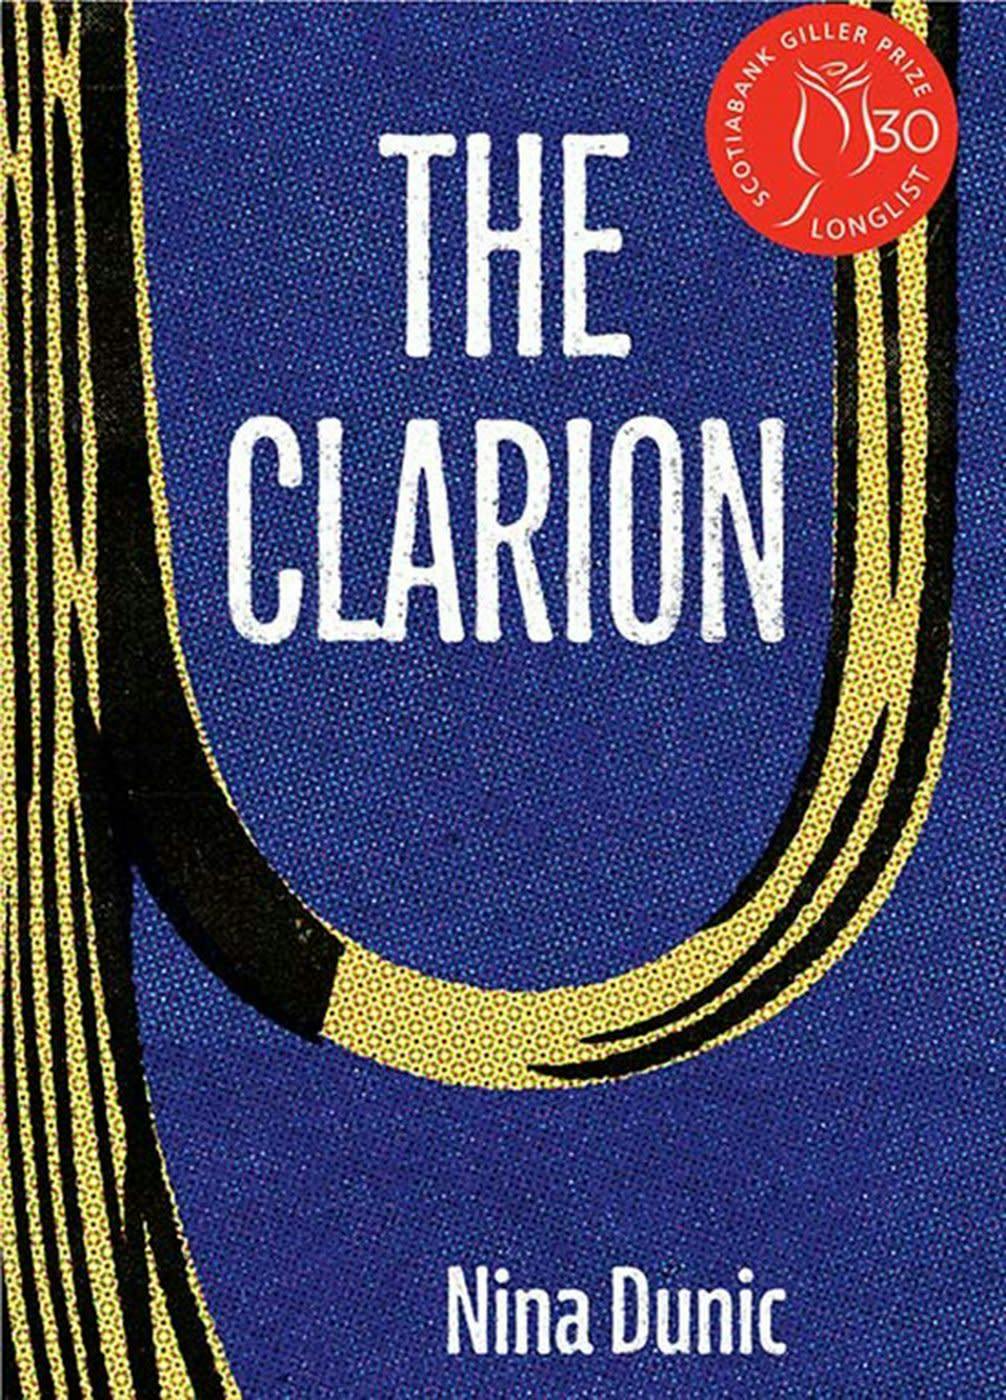 Nina Dunic wins Ontario's Trillium Book Award for debut novel 'The Clarion'